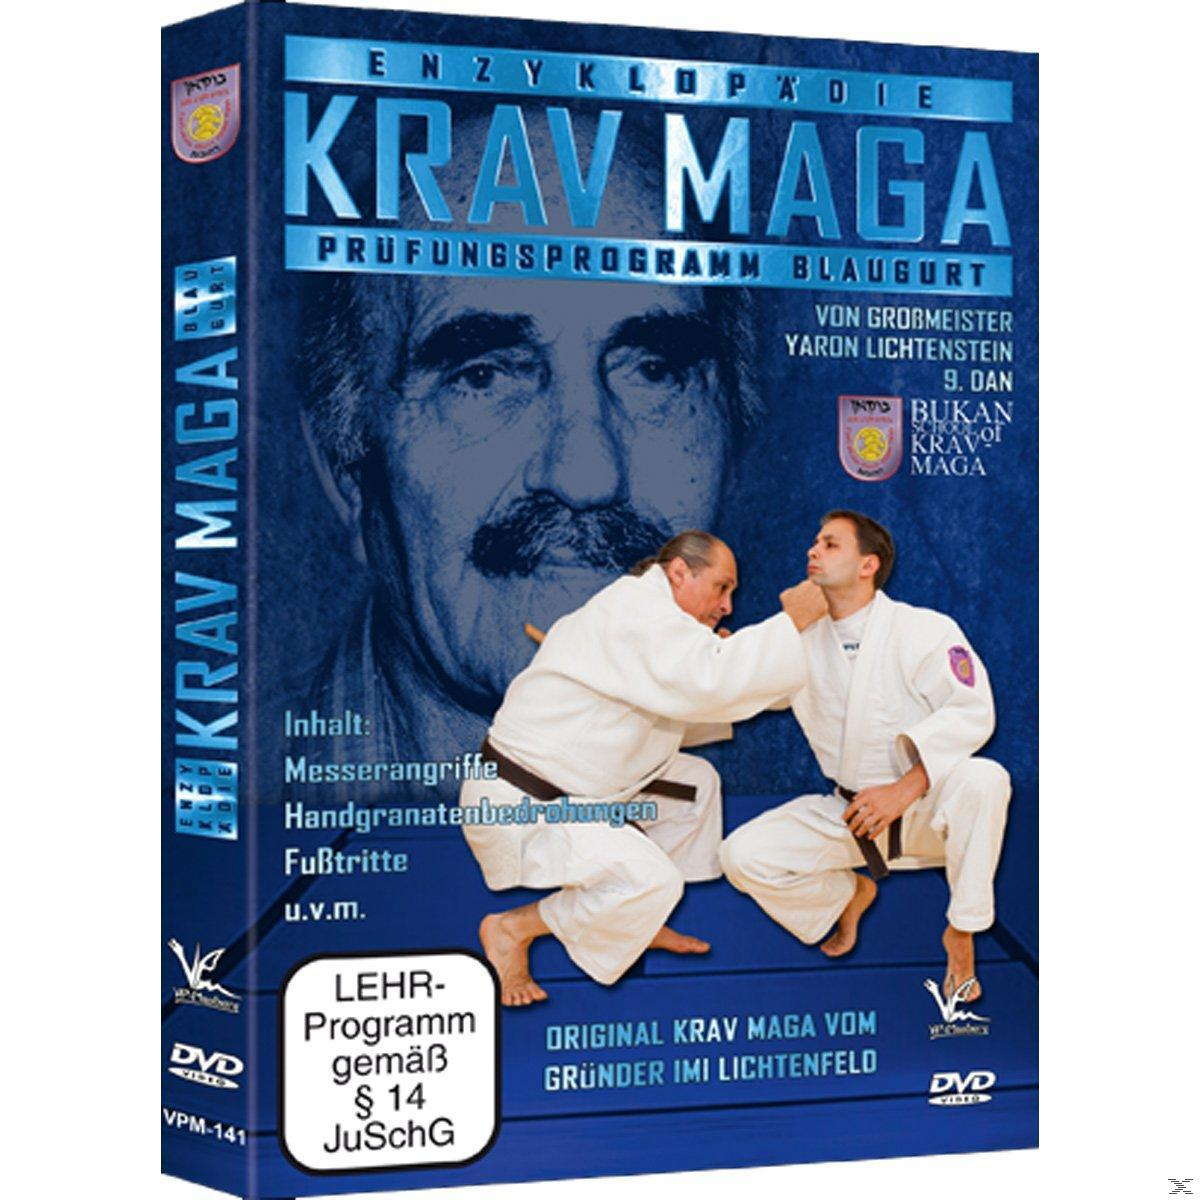 Prüfungsprogramm DVD Krav Blaugurt Maga